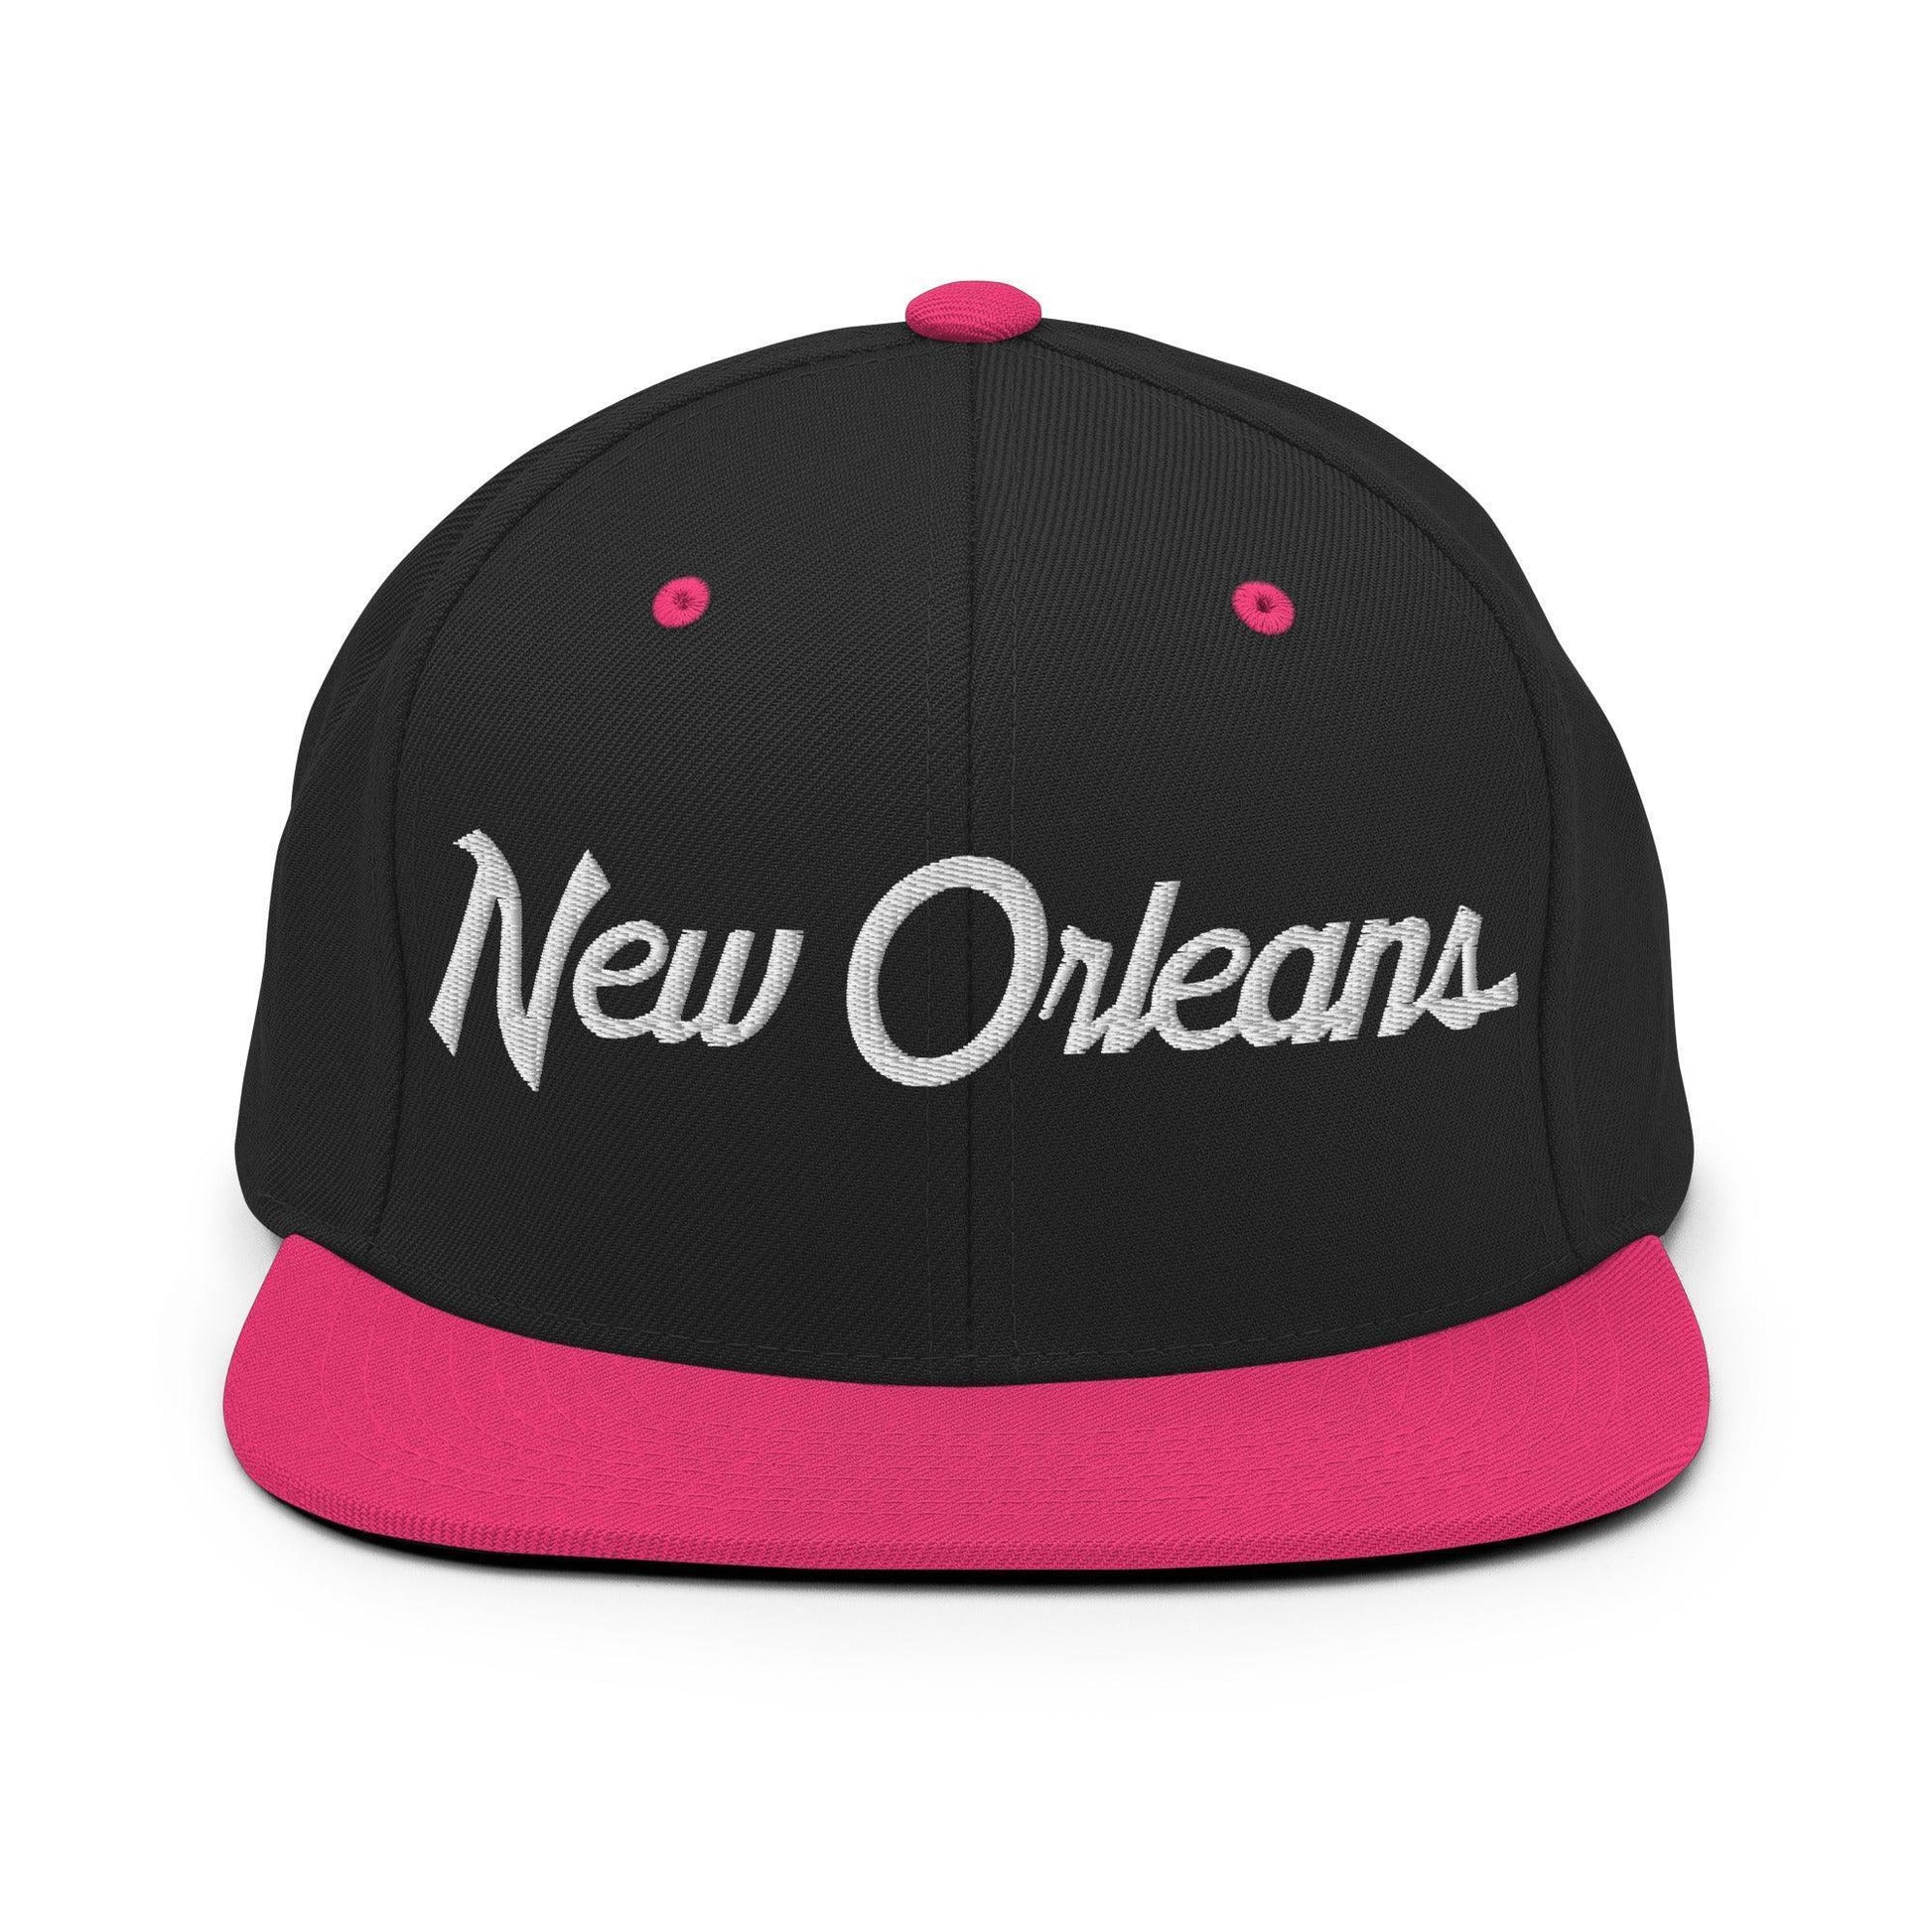 New Orleans Script Snapback Hat Black/ Neon Pink